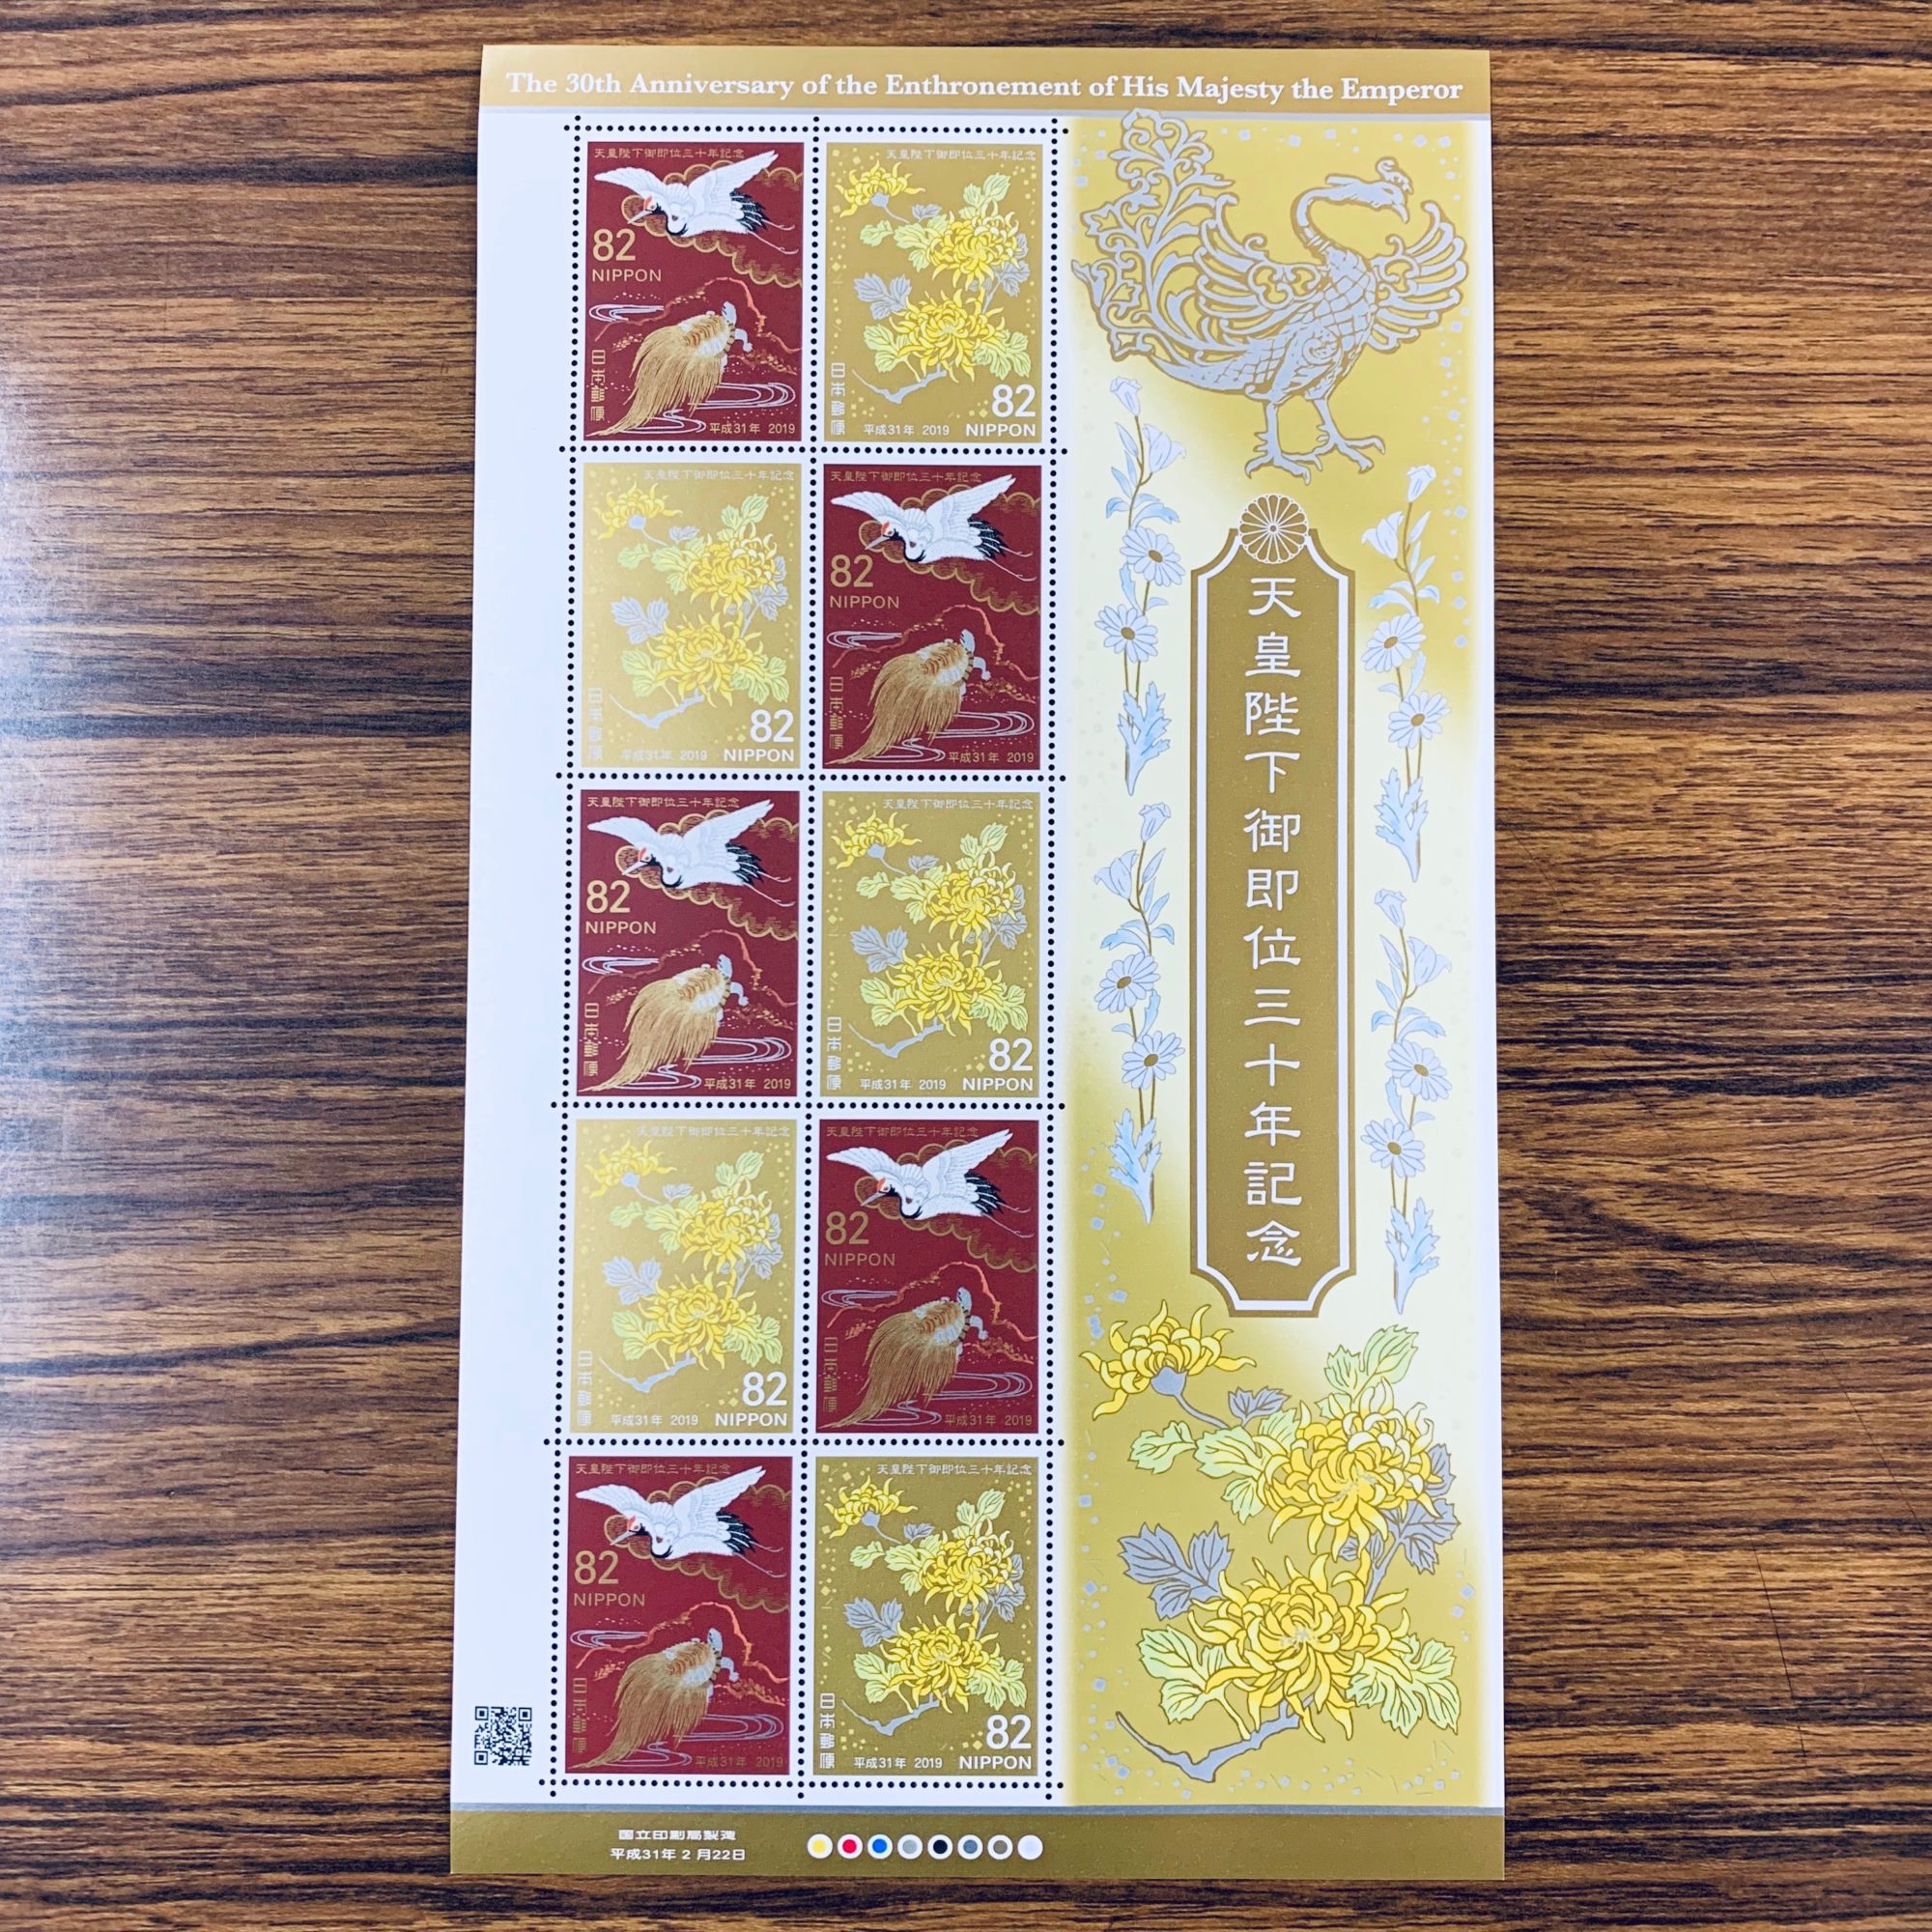 天皇陛下御即位 令和元年記念切手初日カバー宮内庁内一枚 - コレクション